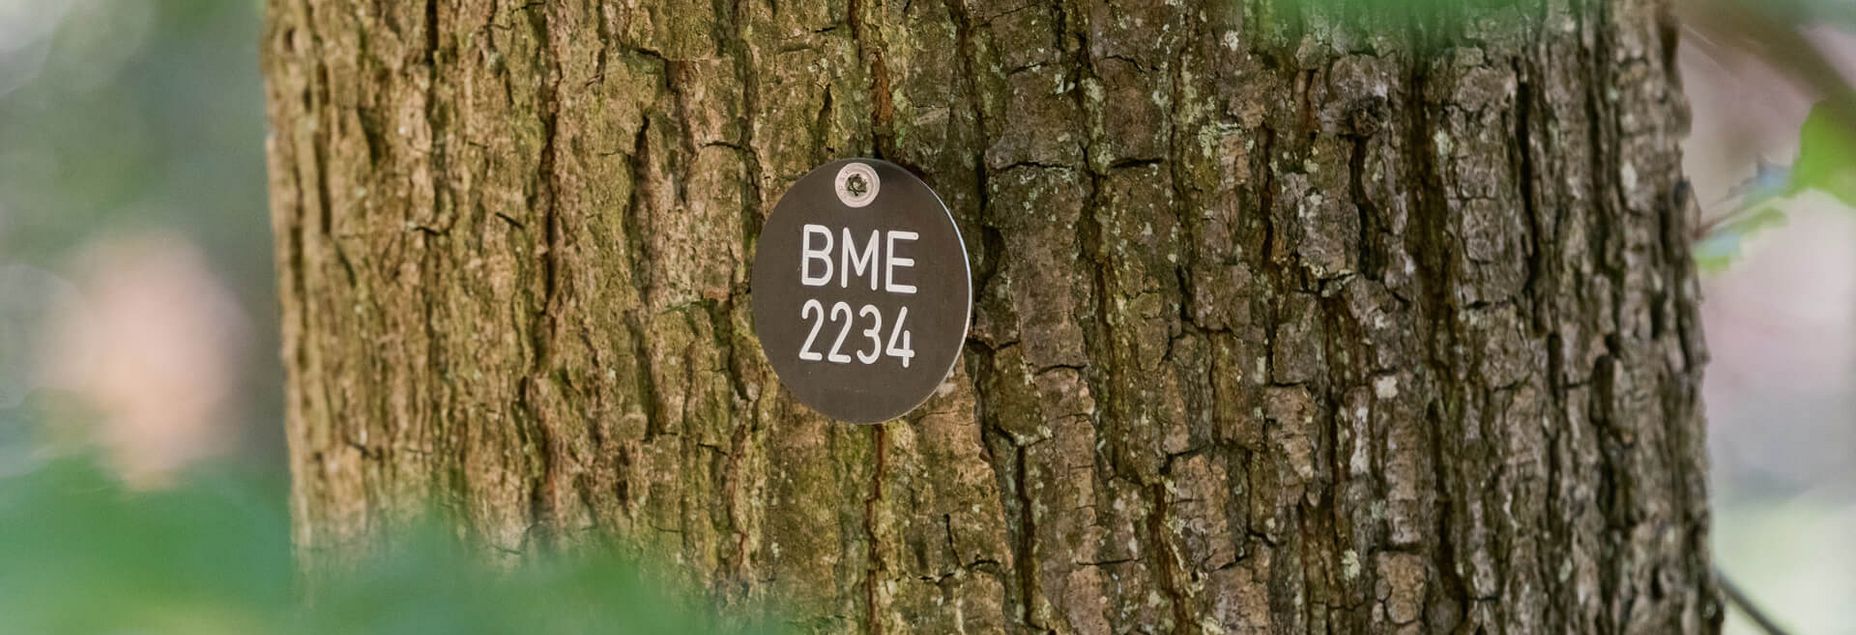 BME 2234 - Plakette